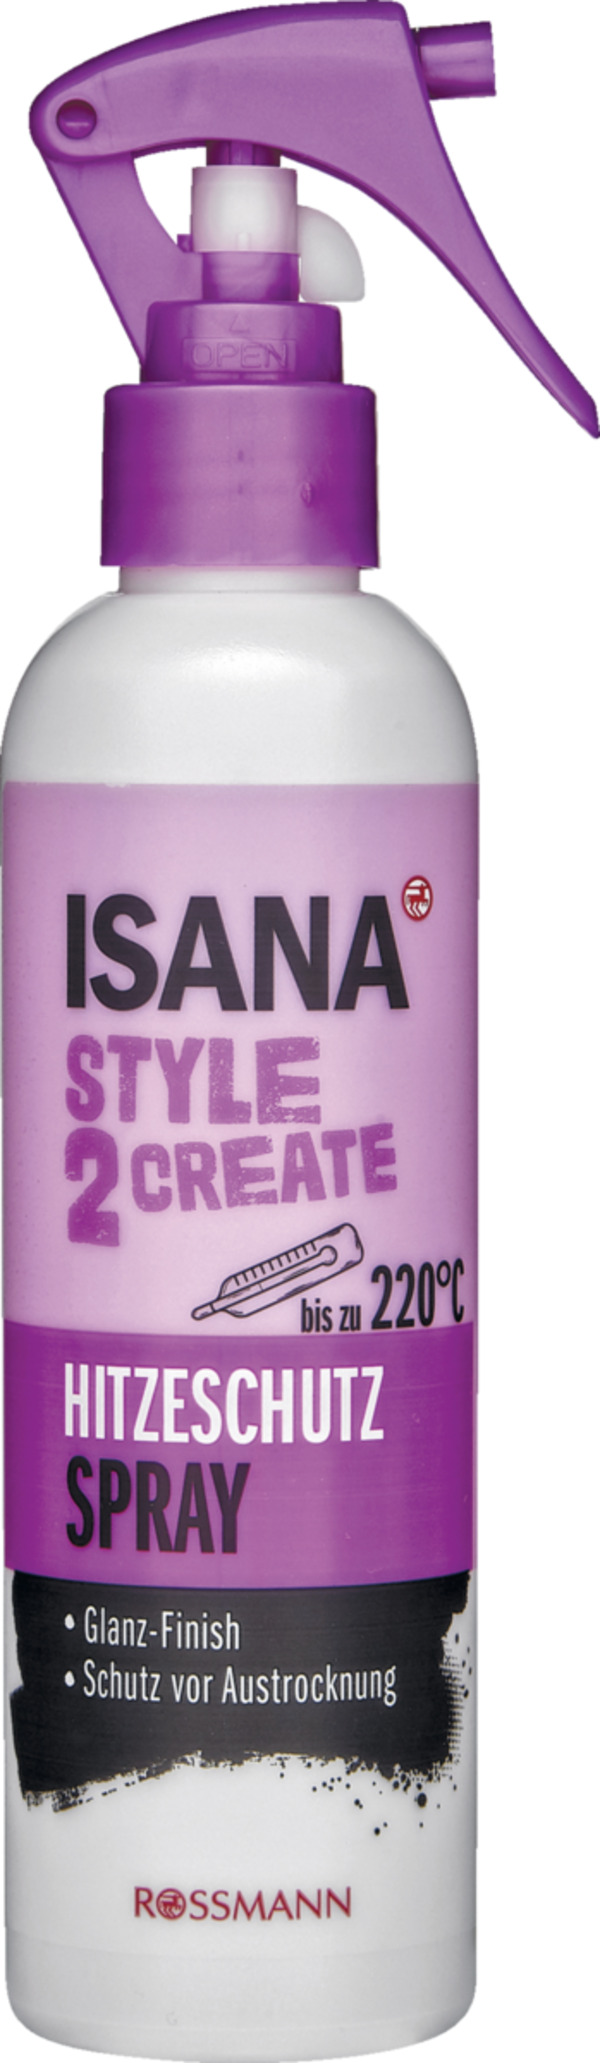 Isana Style2Create Hitzeschutz Spray - 200 ml - INCI Beauty